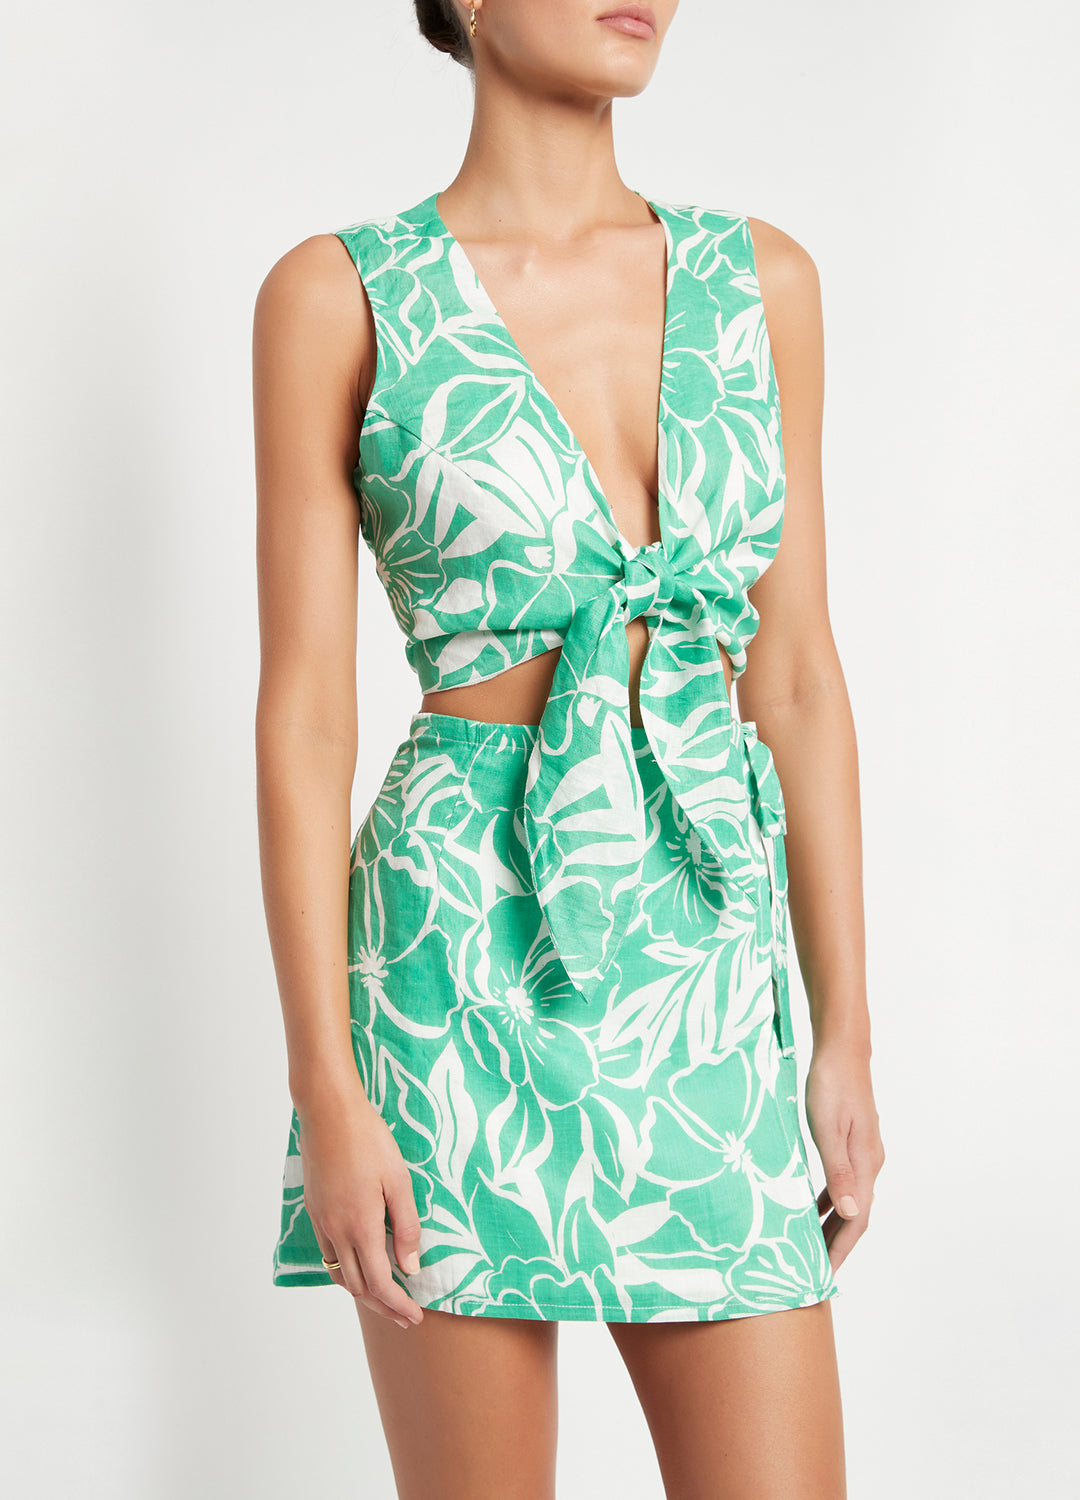 Faithfull the Brand Marsala Wrap Skirt in El Marsa Floral Print Green at Inner Beach Co, Toronto, Canada